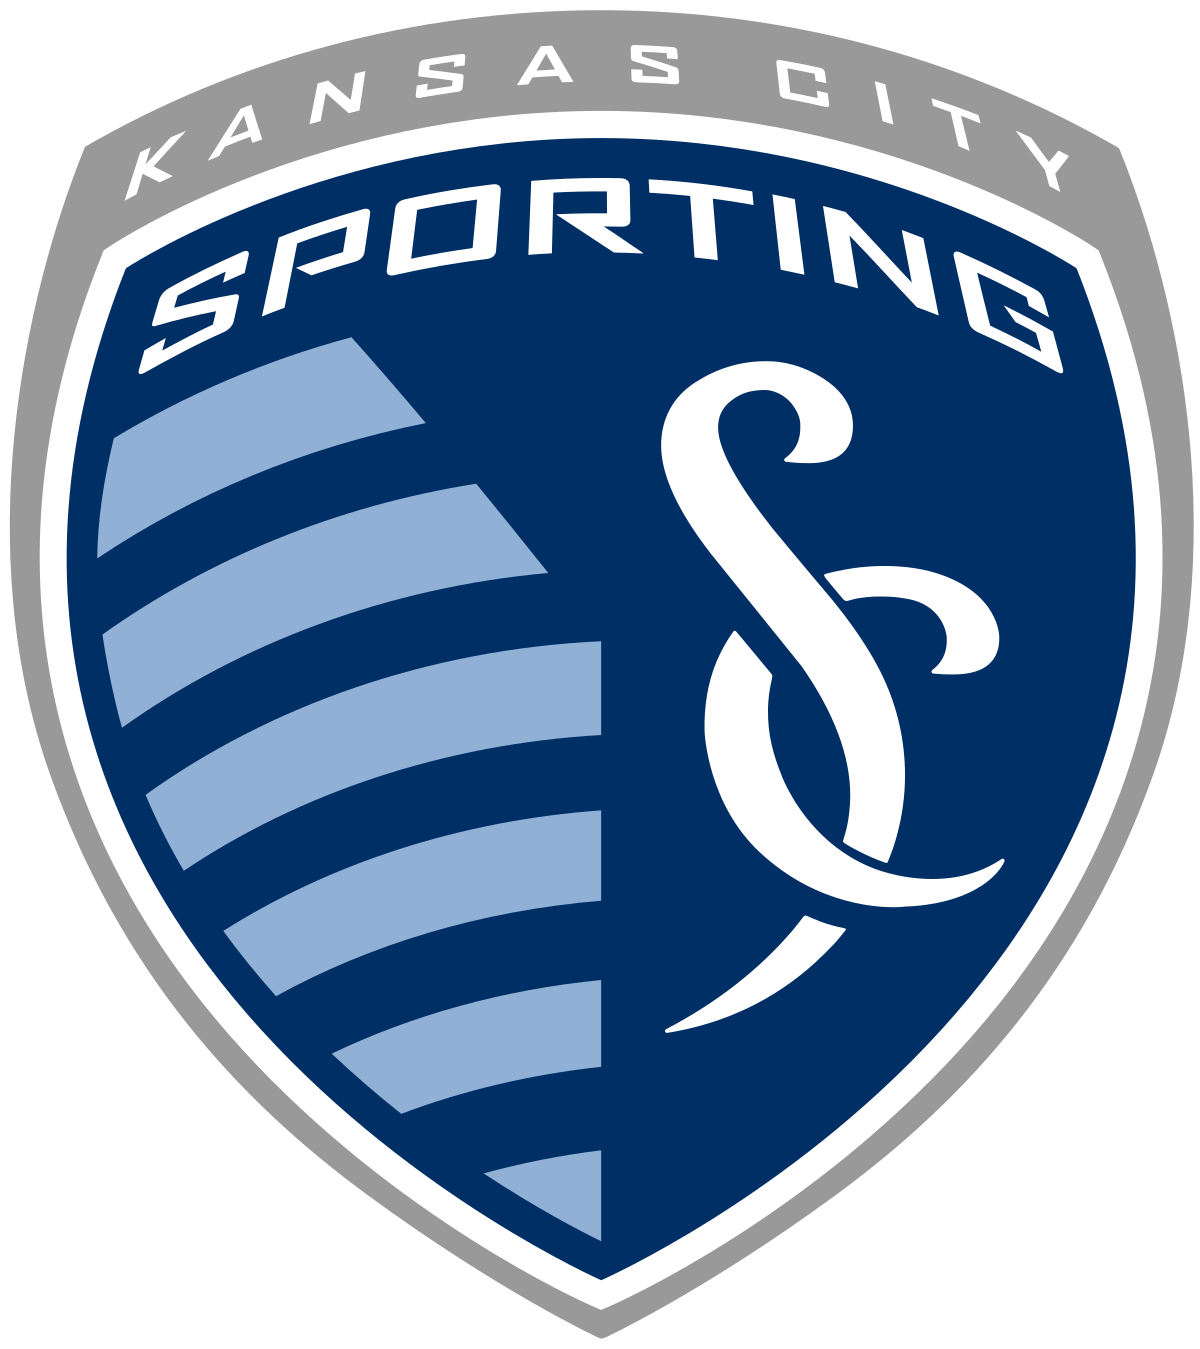 Sporting KC Logo - Sporting Kansas City